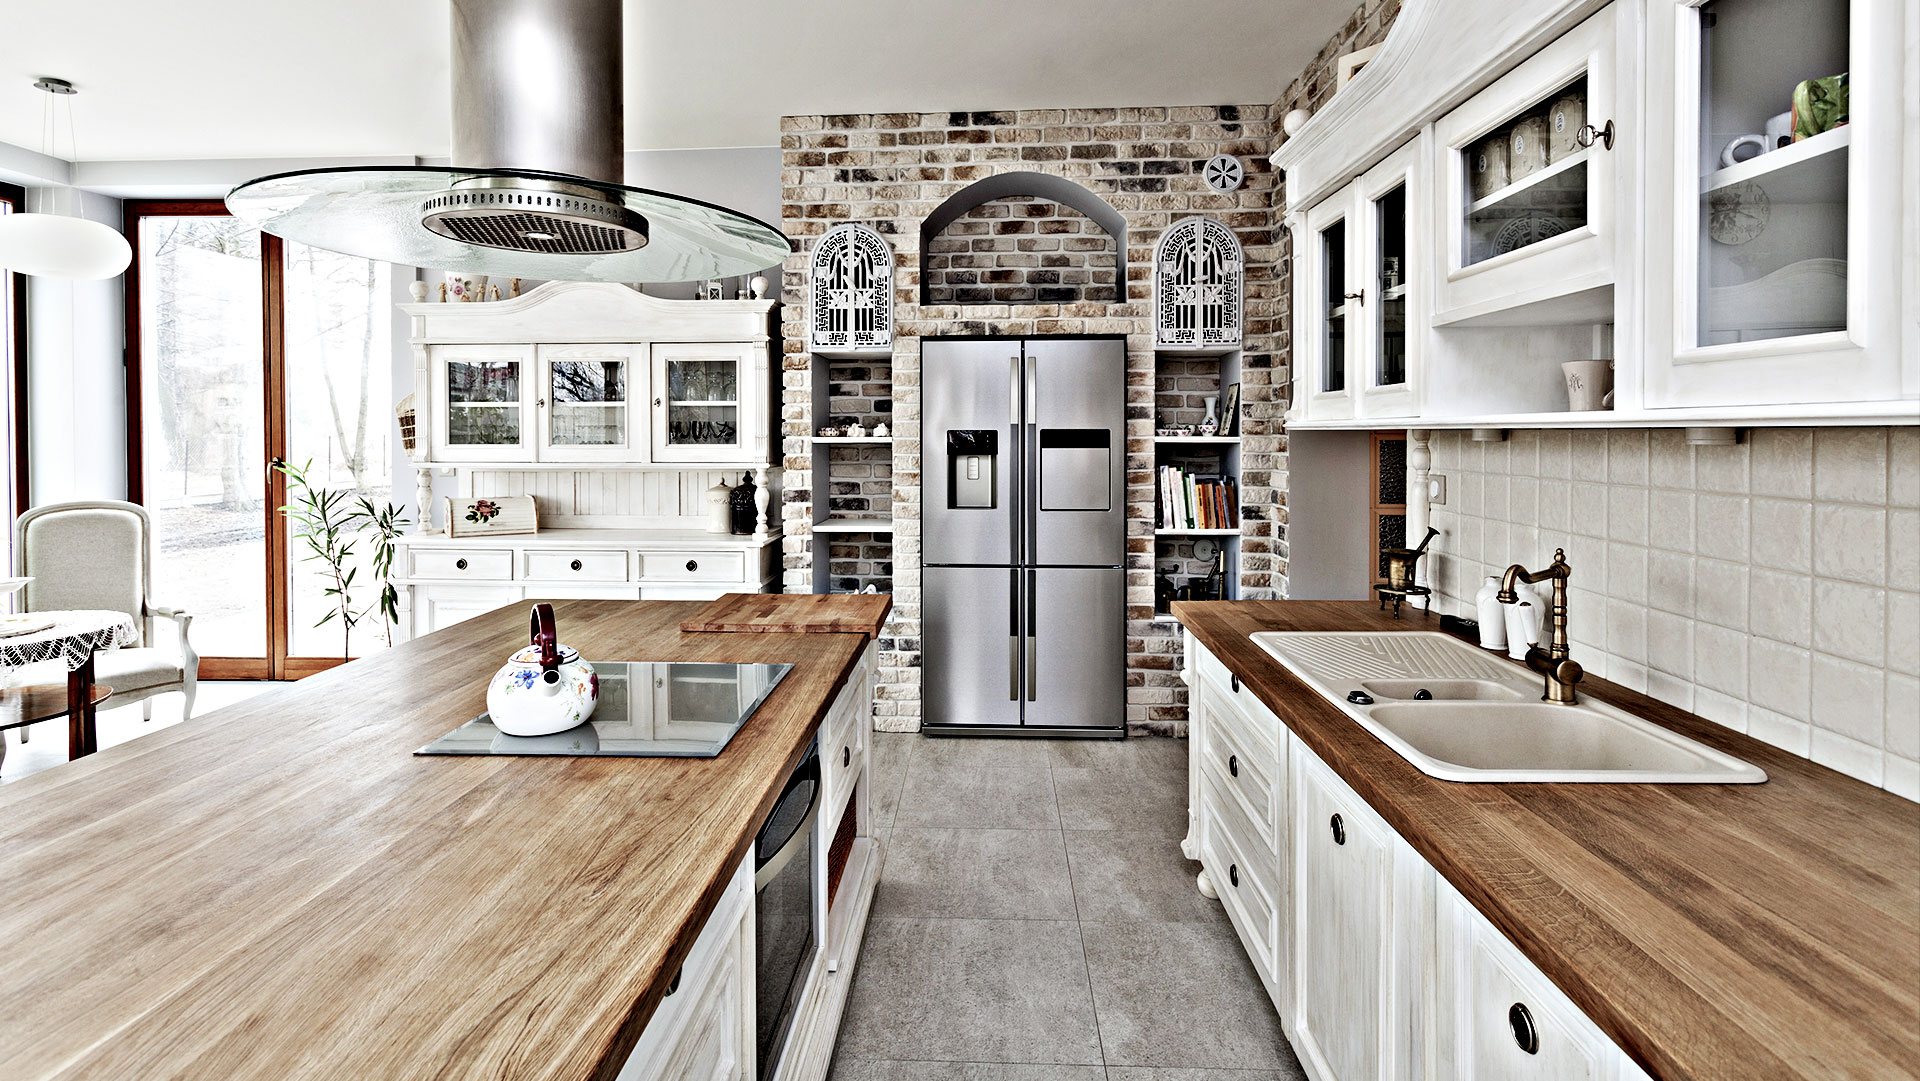 Jeff Bobb Home Improvements, LLC Remodeled Kitchen 1